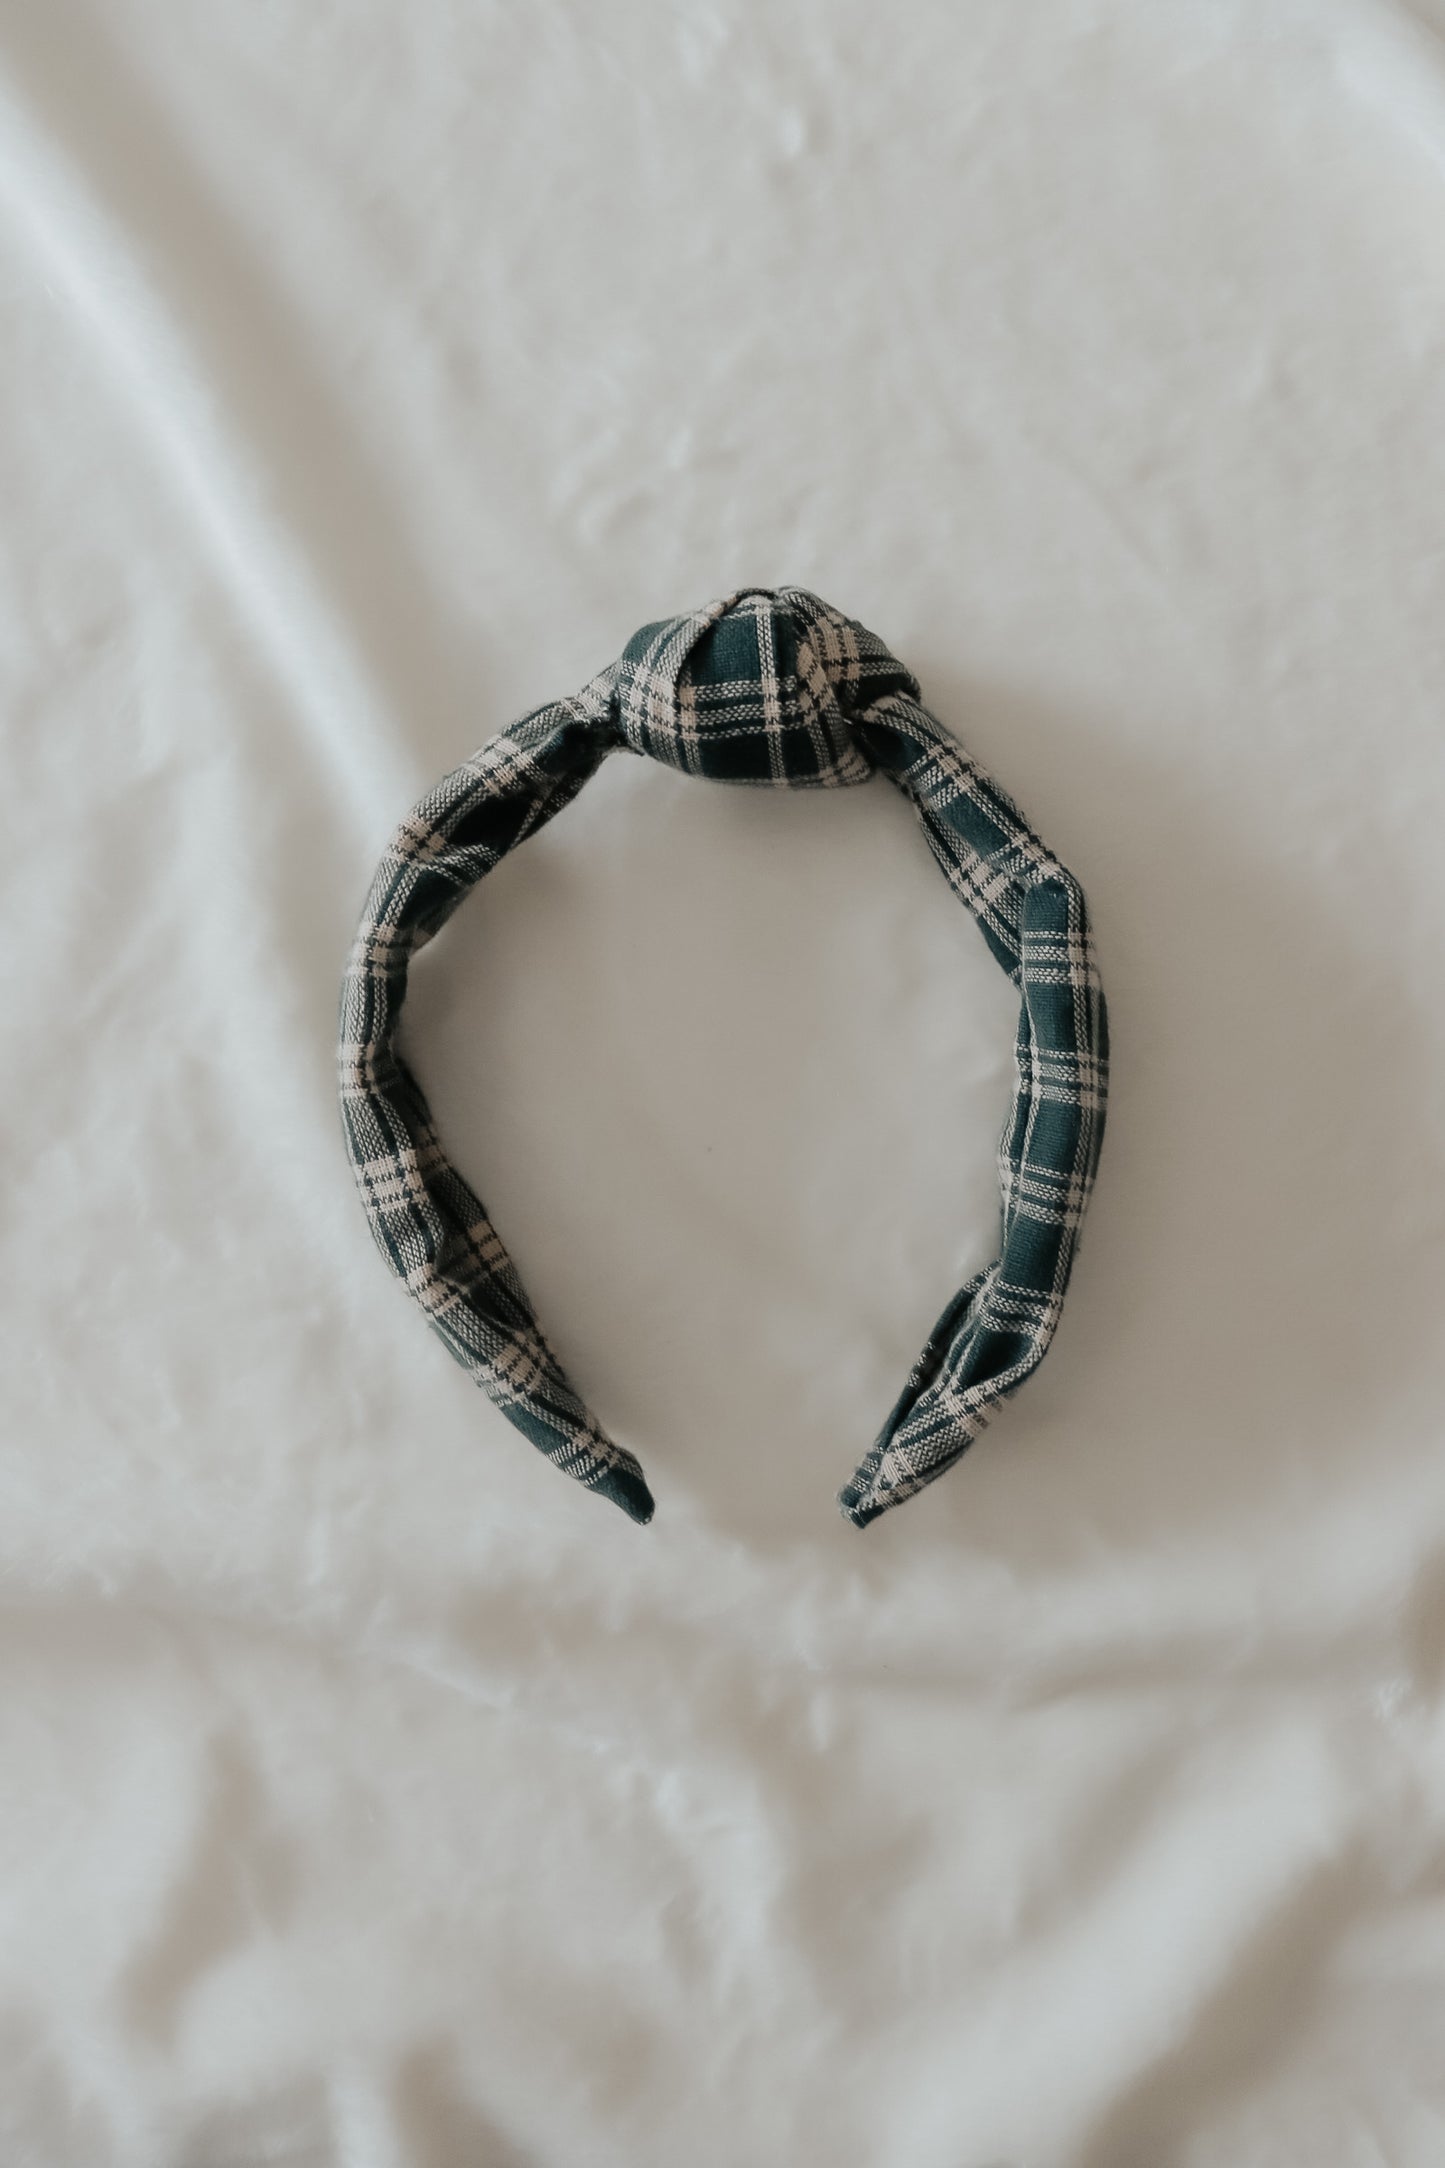 Pine Knot Headbands